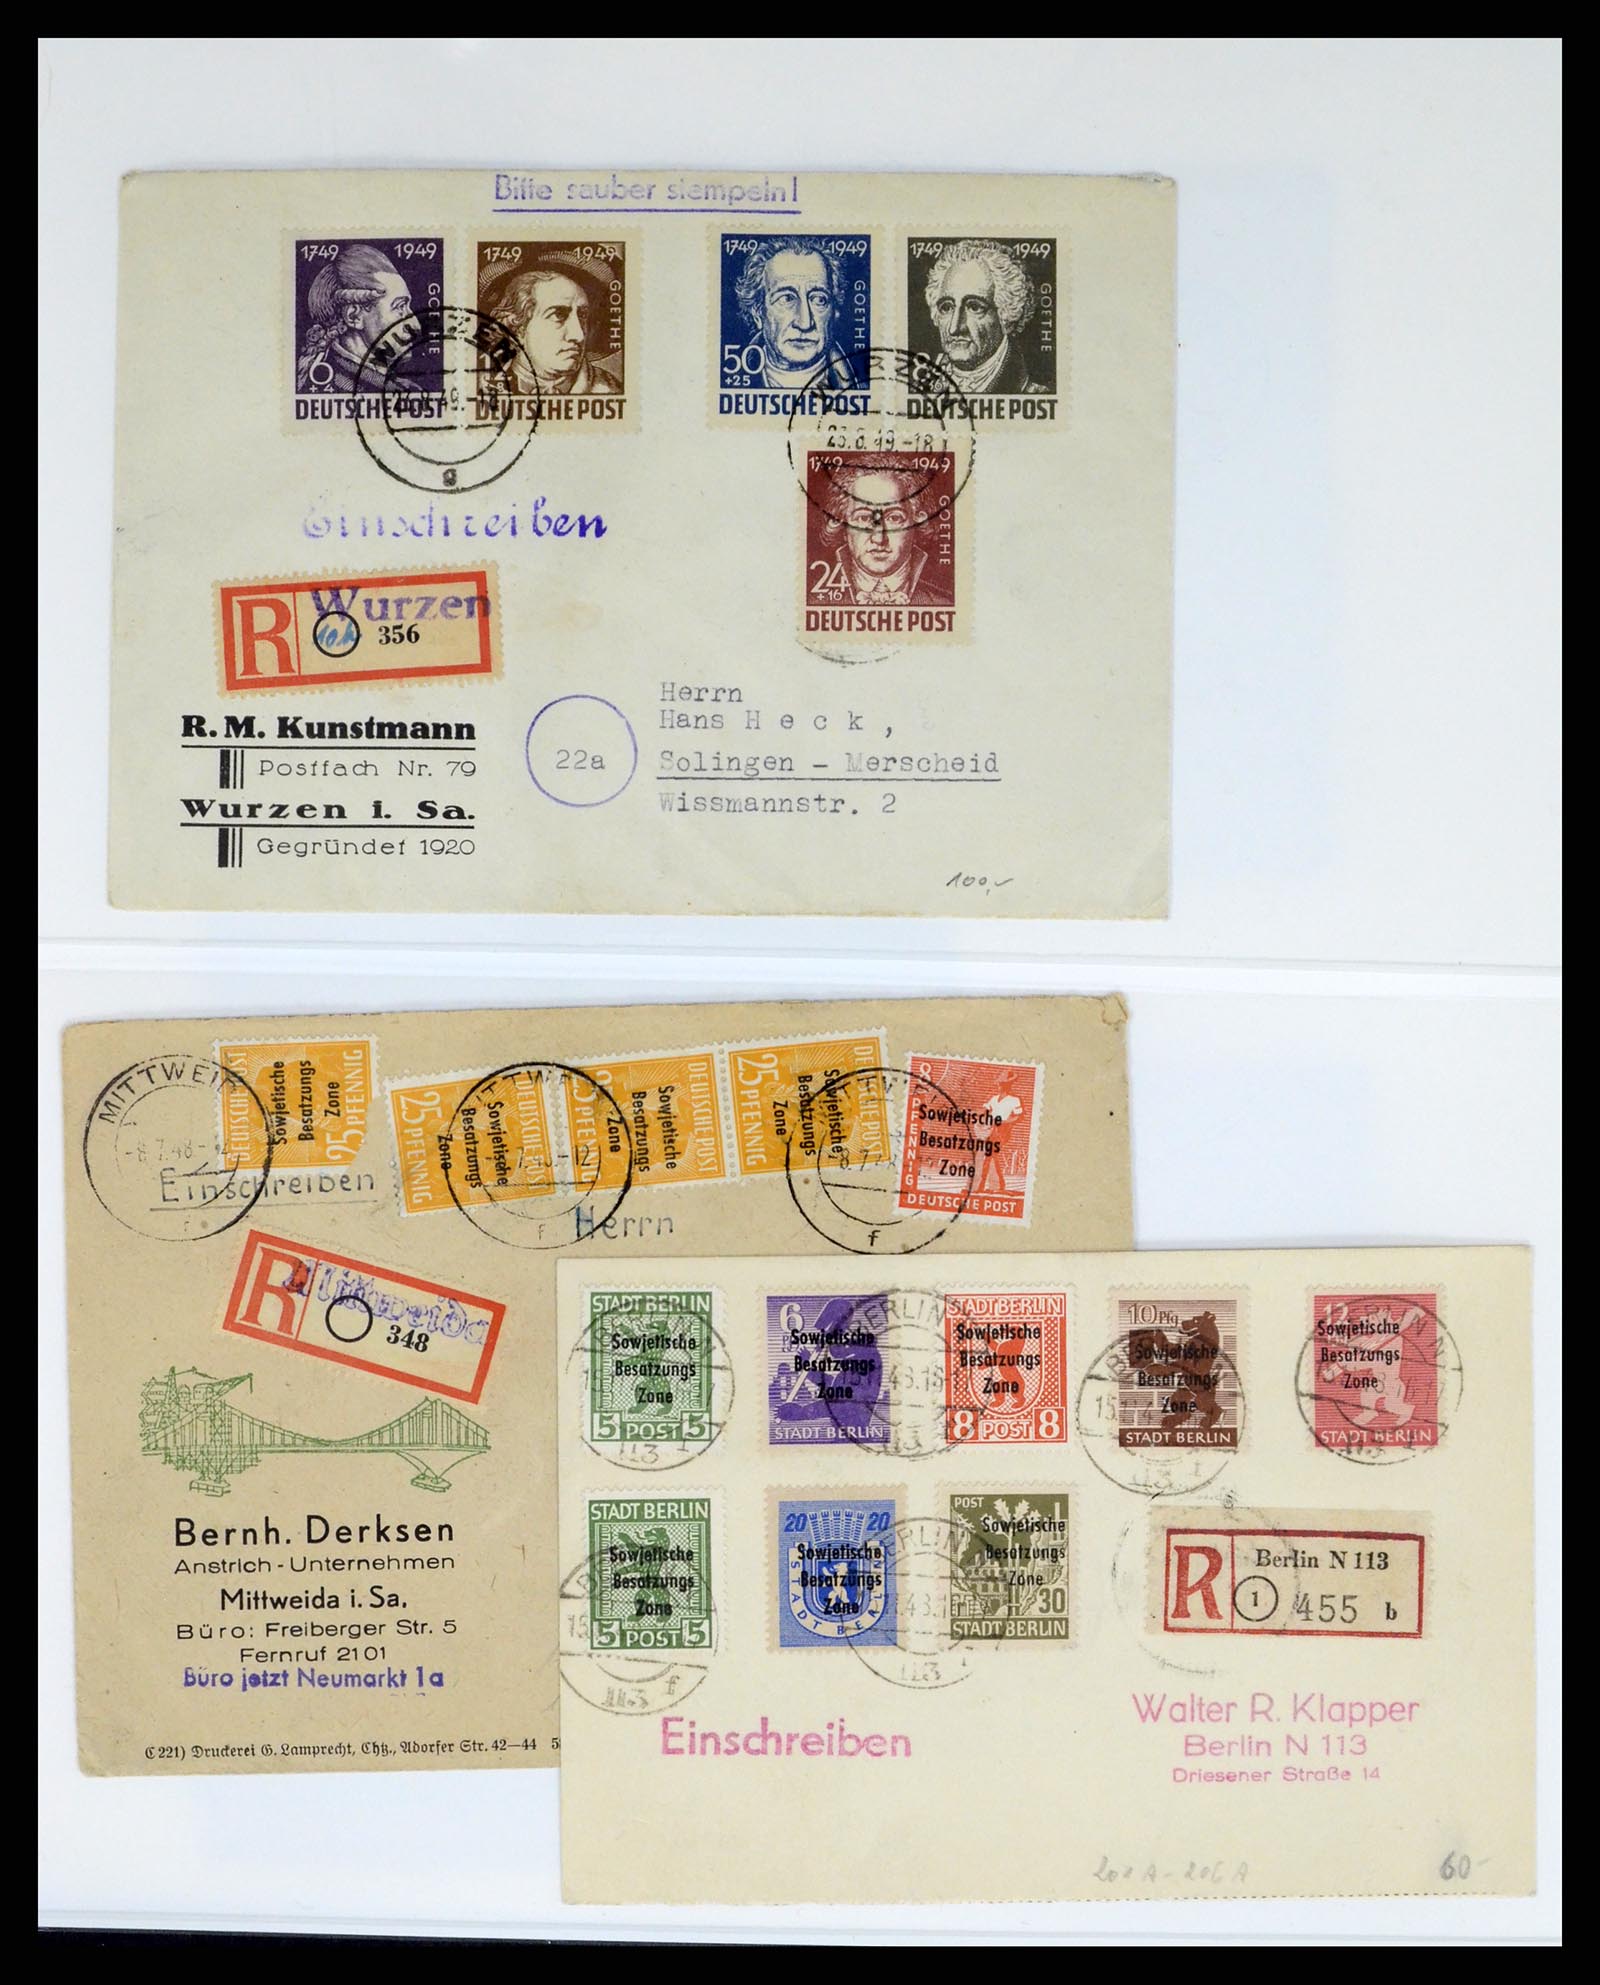 37548 037 - Stamp collection 37548 Soviet Zone 1945-1949.